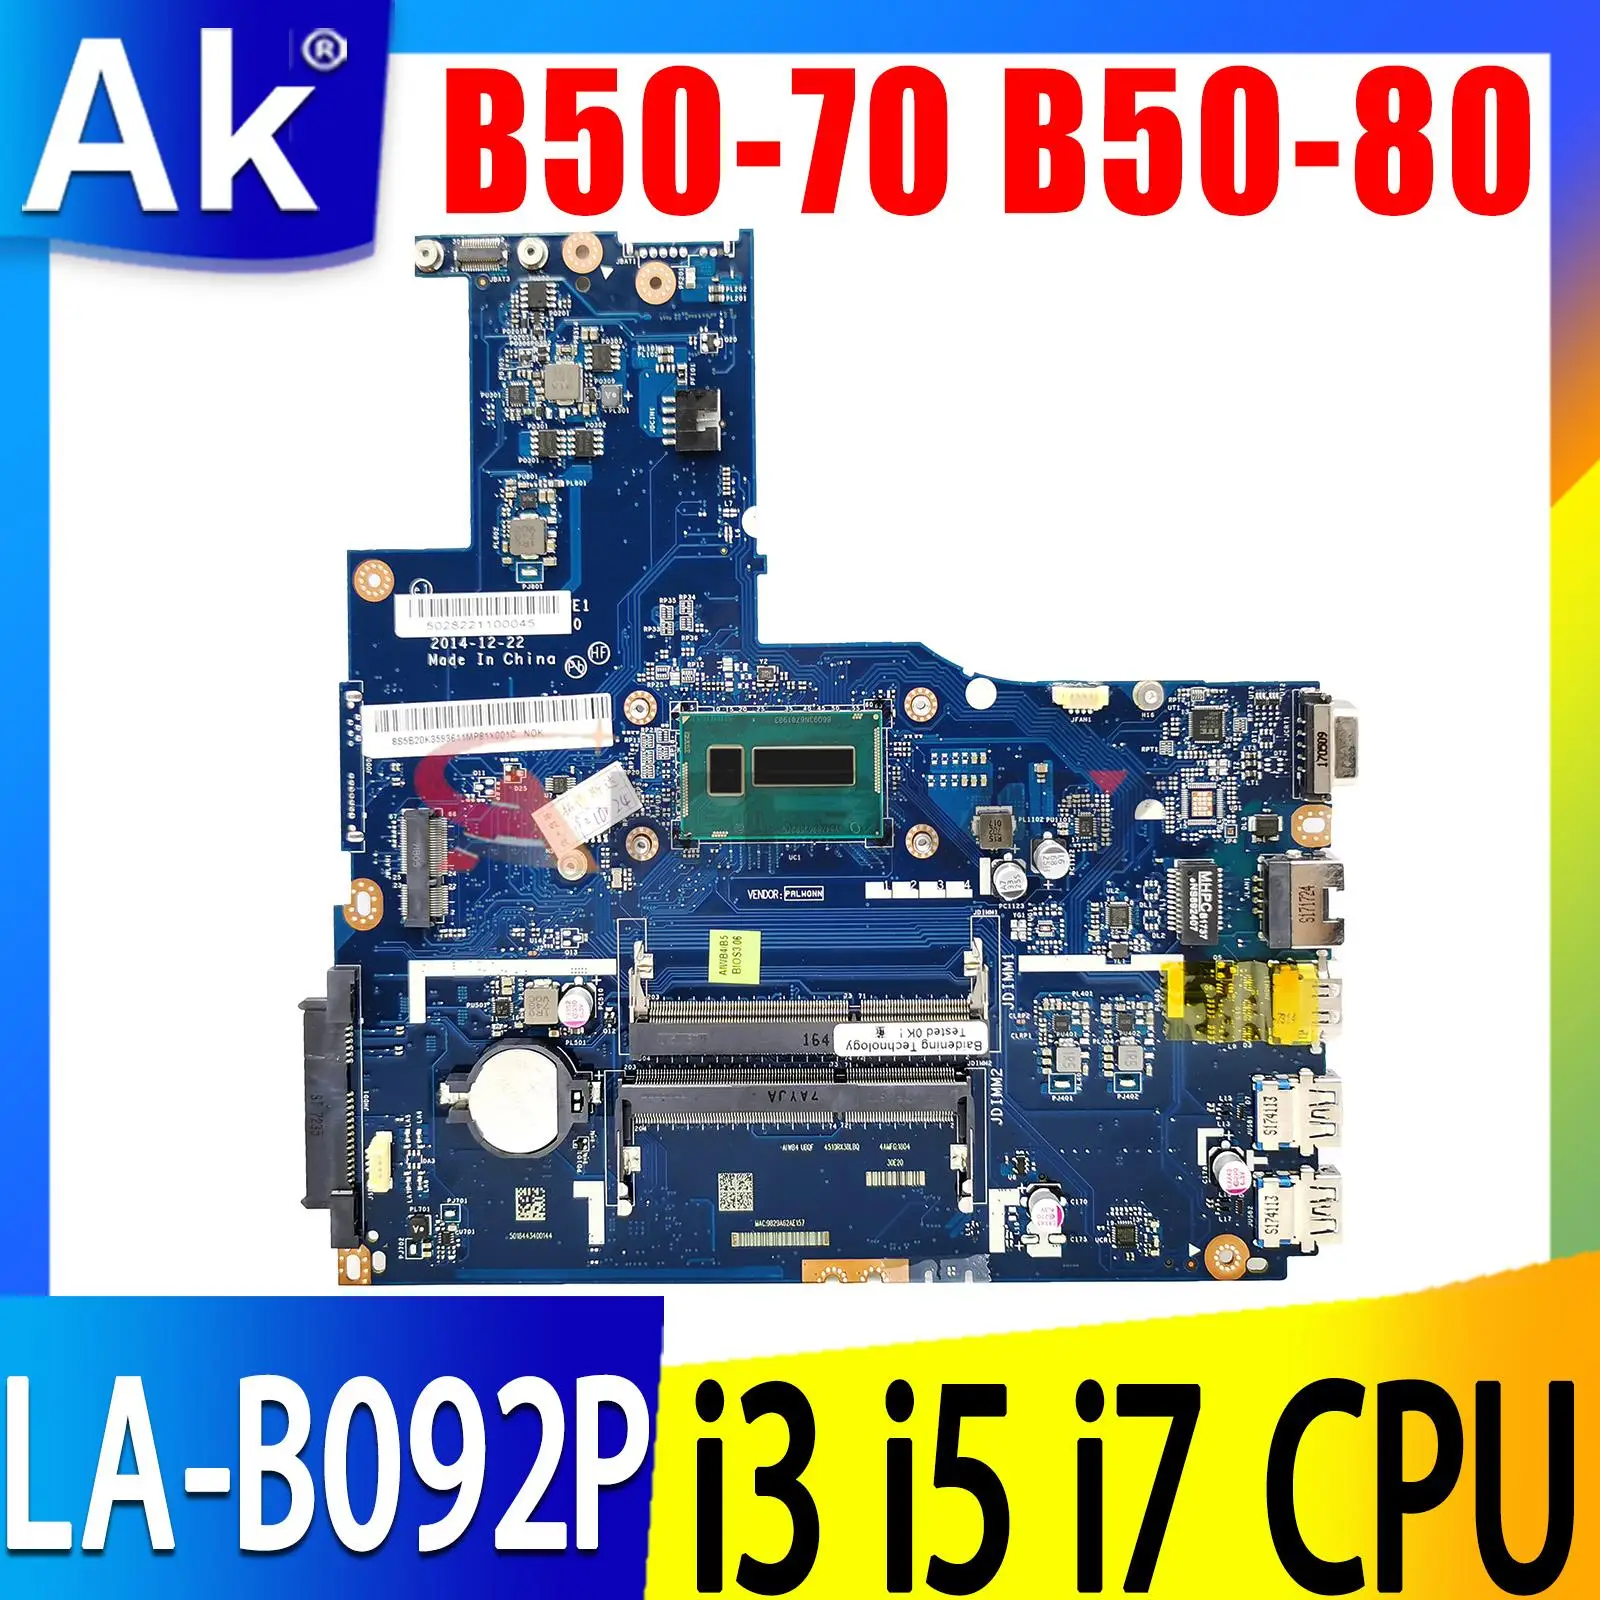 

For Lenovo Ideapad B50-70 B50-80 Notebook Mainboard ZIWB2/ZIWB3 LA-B092P Mainboard with 2957U 3825U i3 i5 i7 4th/5th Gen CPU